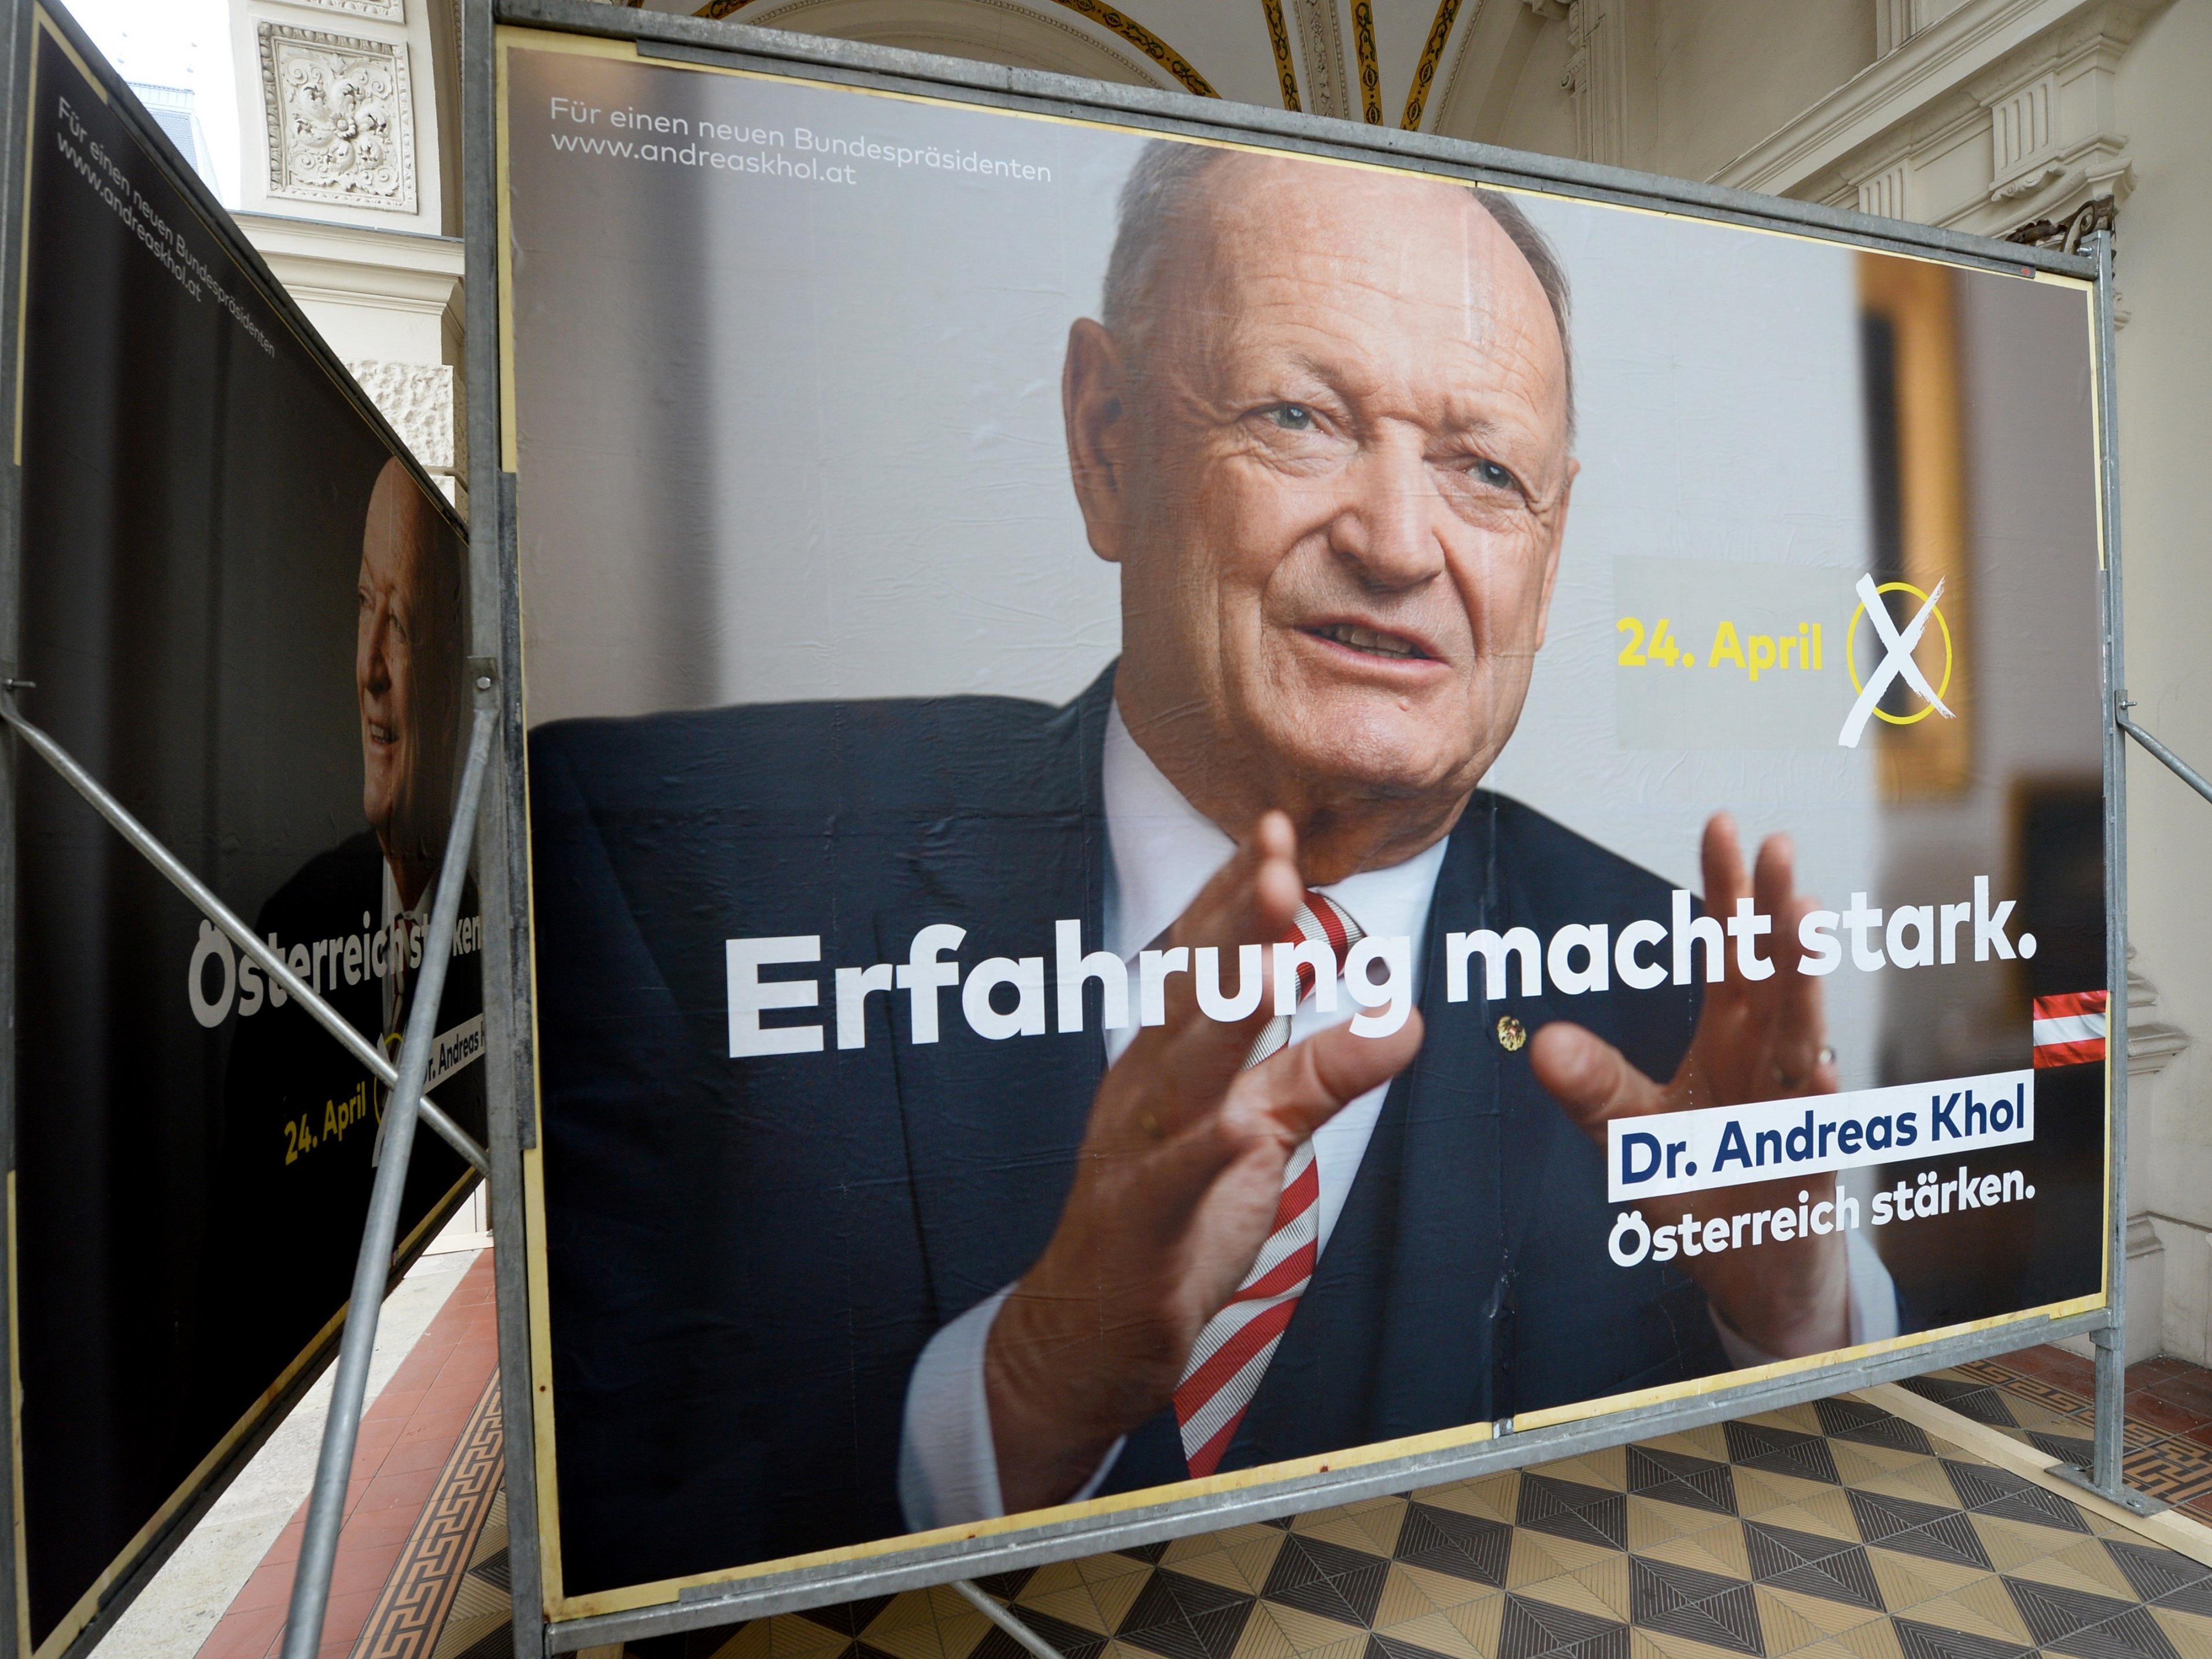 Die ÖVP hat die Plakatkampagne für Andreas Khol vorgestellt.